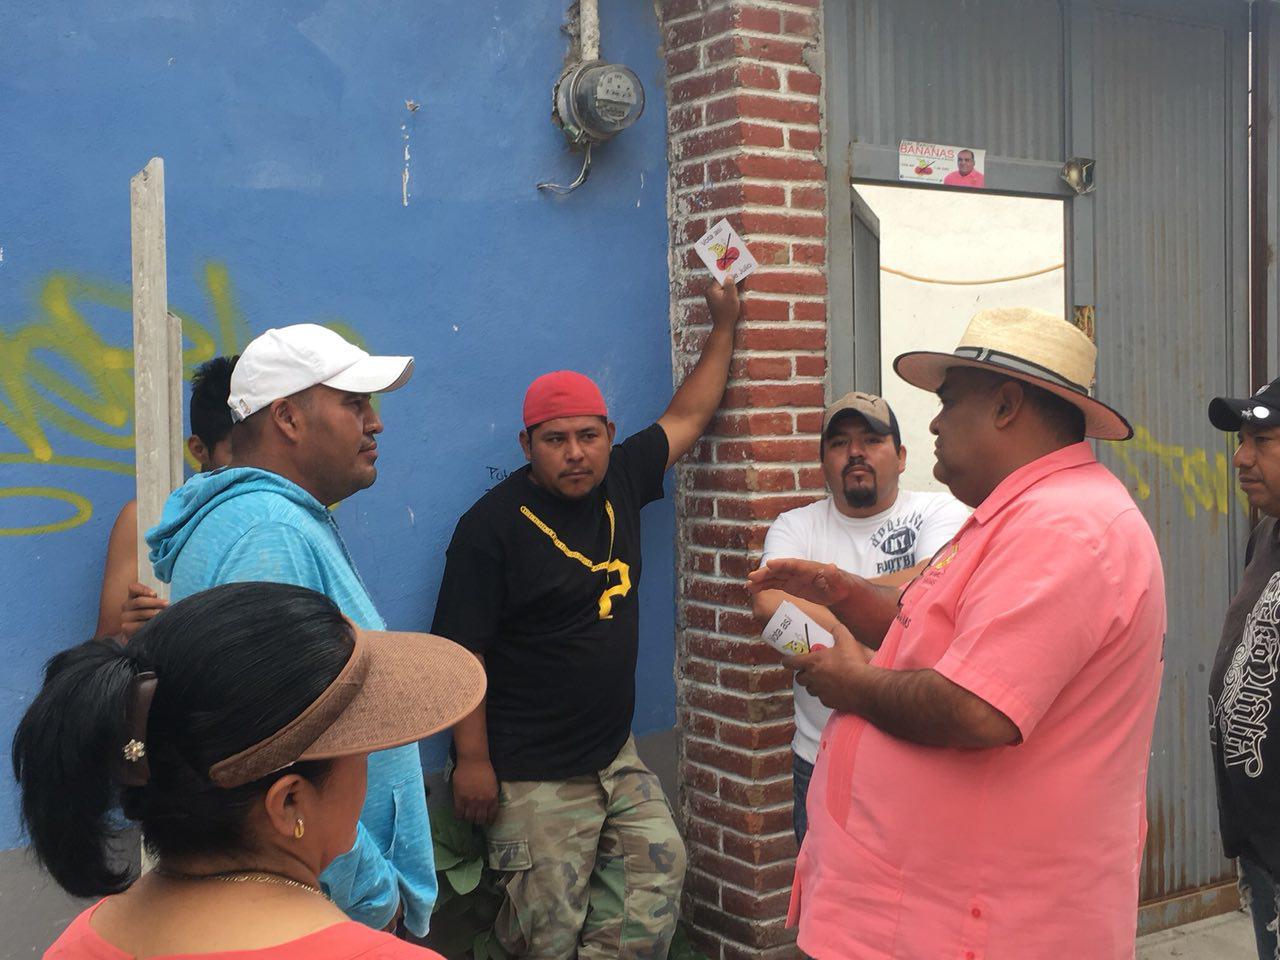  Juan Ramírez “Bananas” escucha quejas de habitantes de Chichimequillas